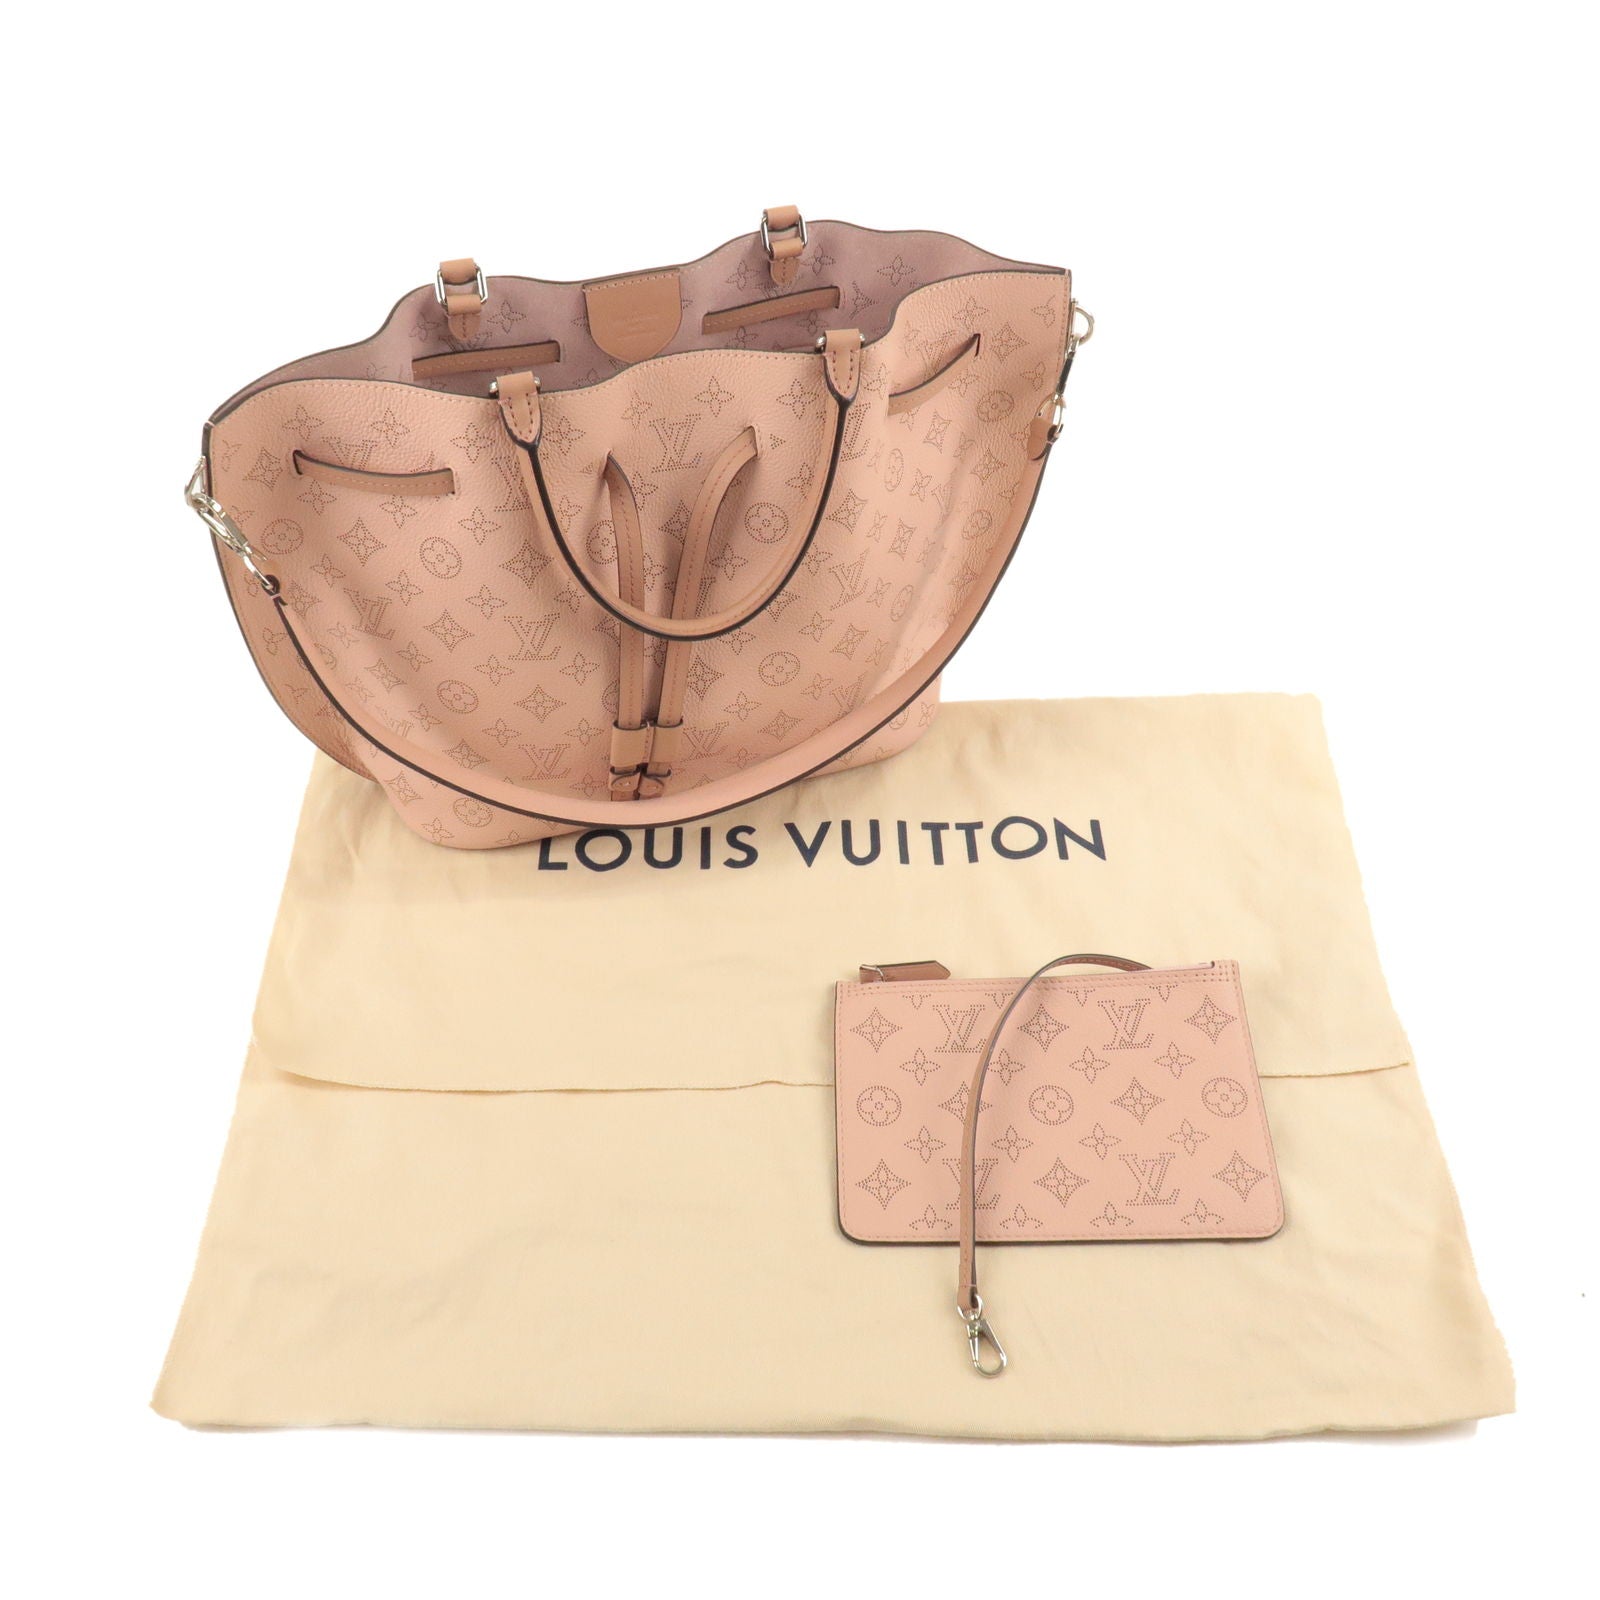 Magnolia - Sophie Turner Goes Glam in Louis Vuitton Minidress